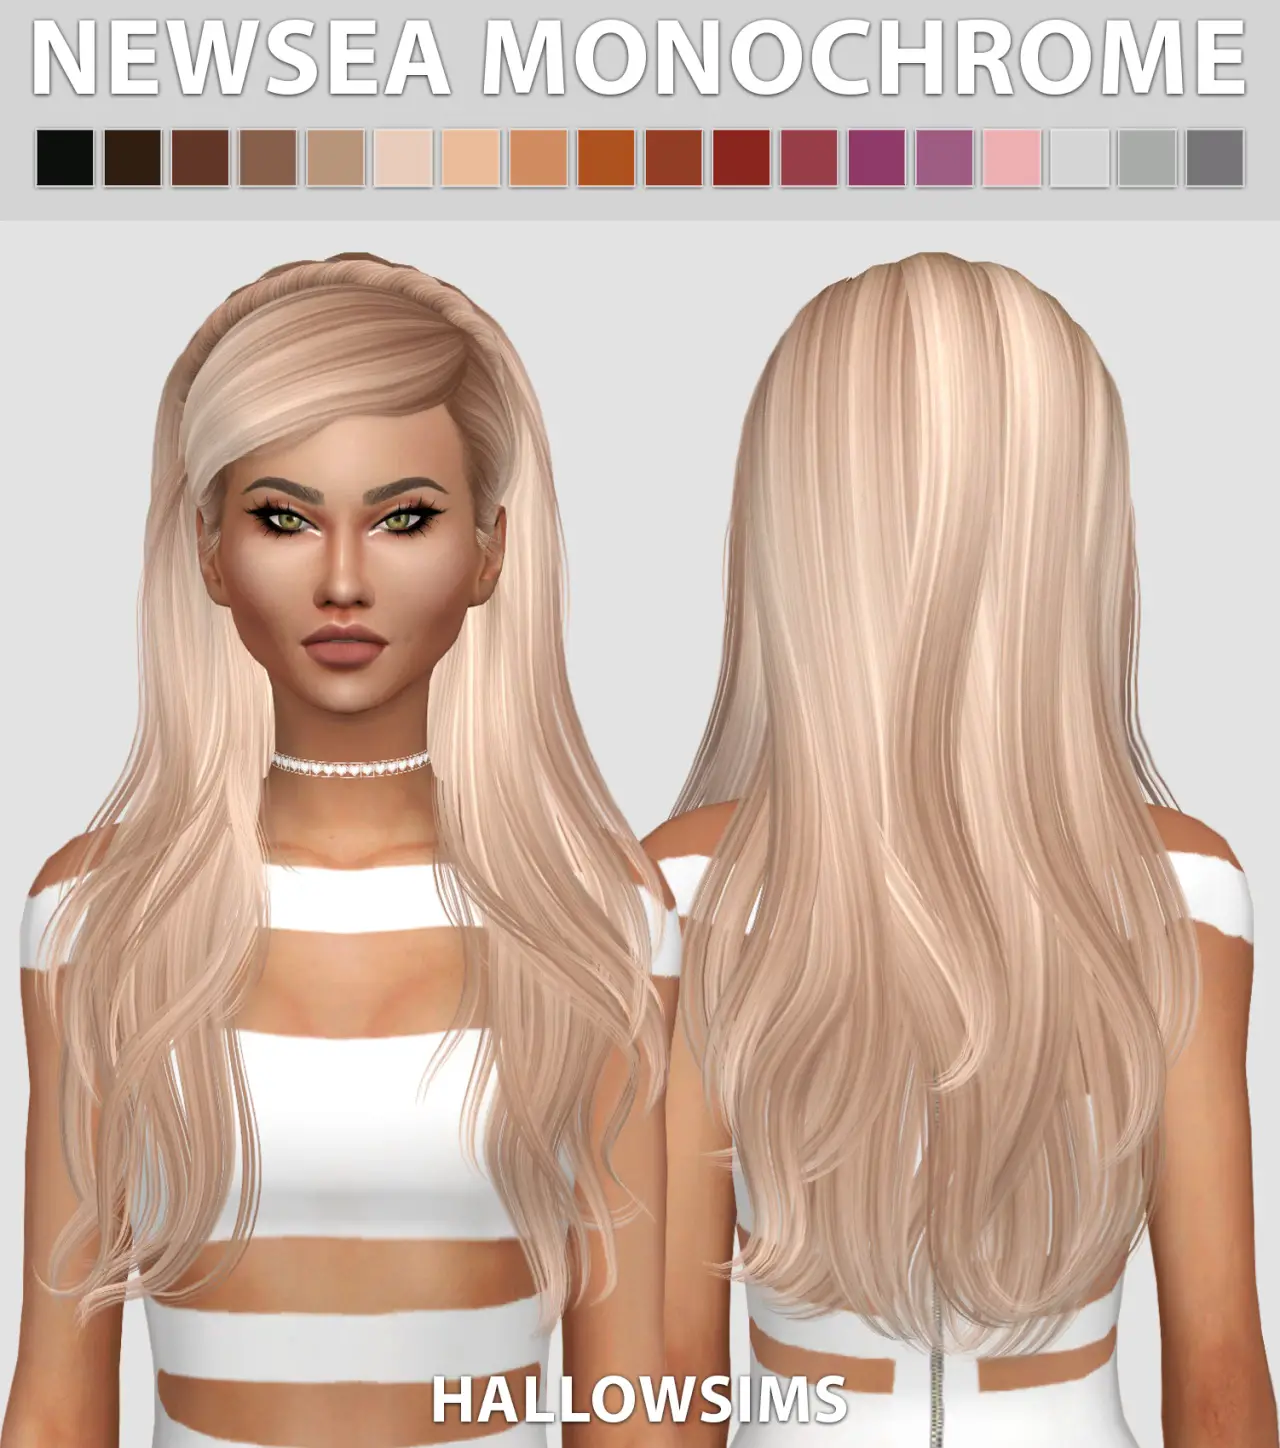 Sims 4 Hairs ~ Hallow Sims: Newsea`s Monochrome hair retextured